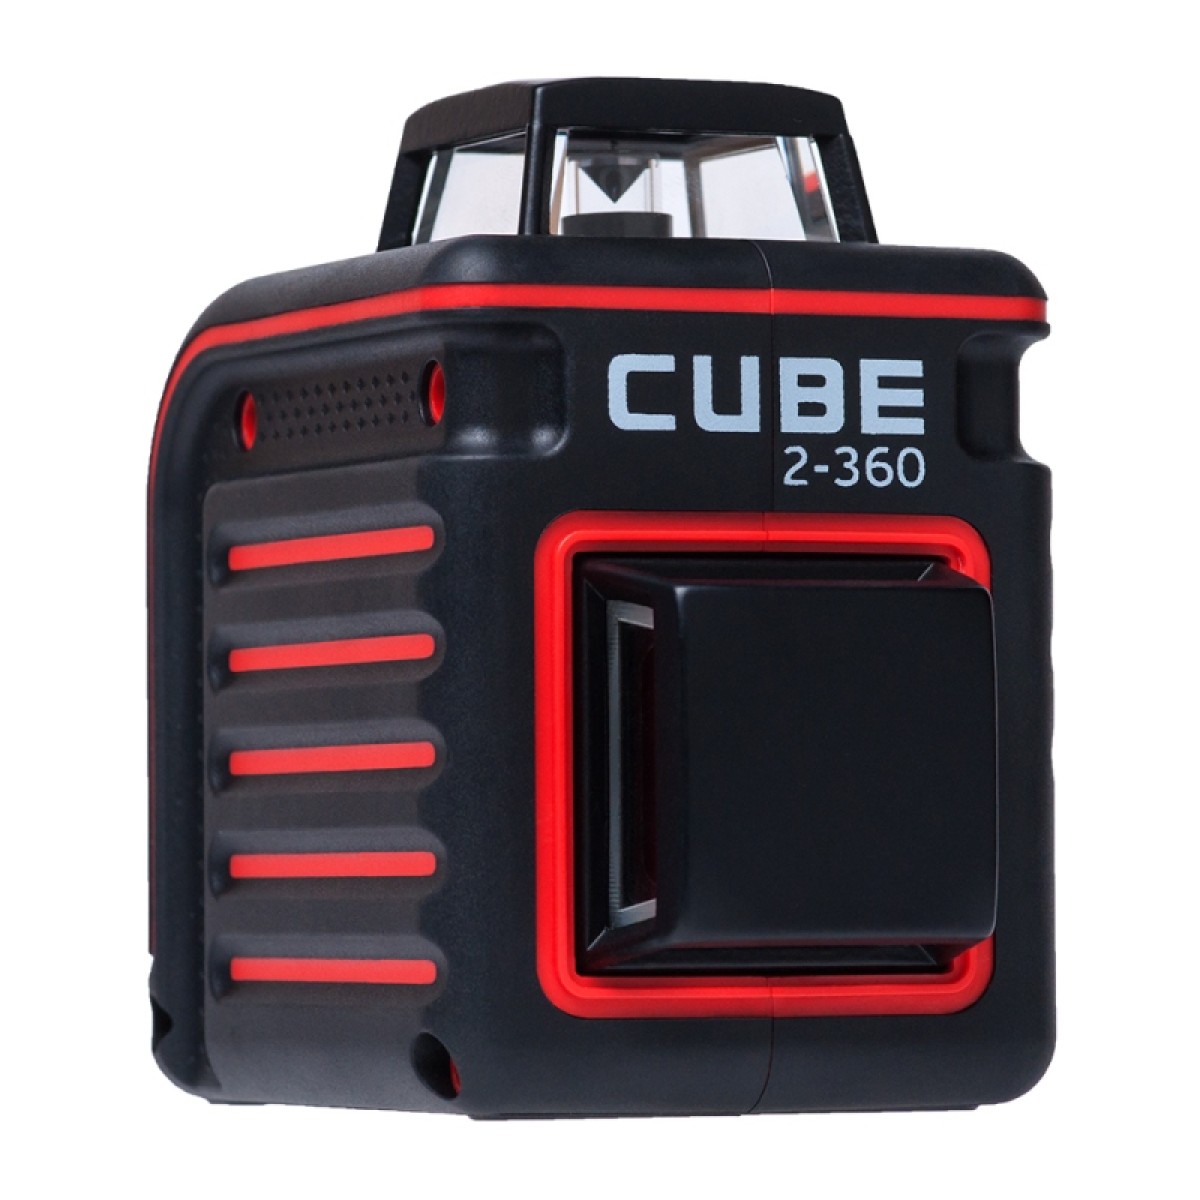 Ada cube 360 basic edition. Лазерный уровень ada Cube 360. Лазерный уровень ada Cube 2-360. Ada instruments Cube 2-360 Basic Edition. Ada Cube 2-360 professional Edition а00449.